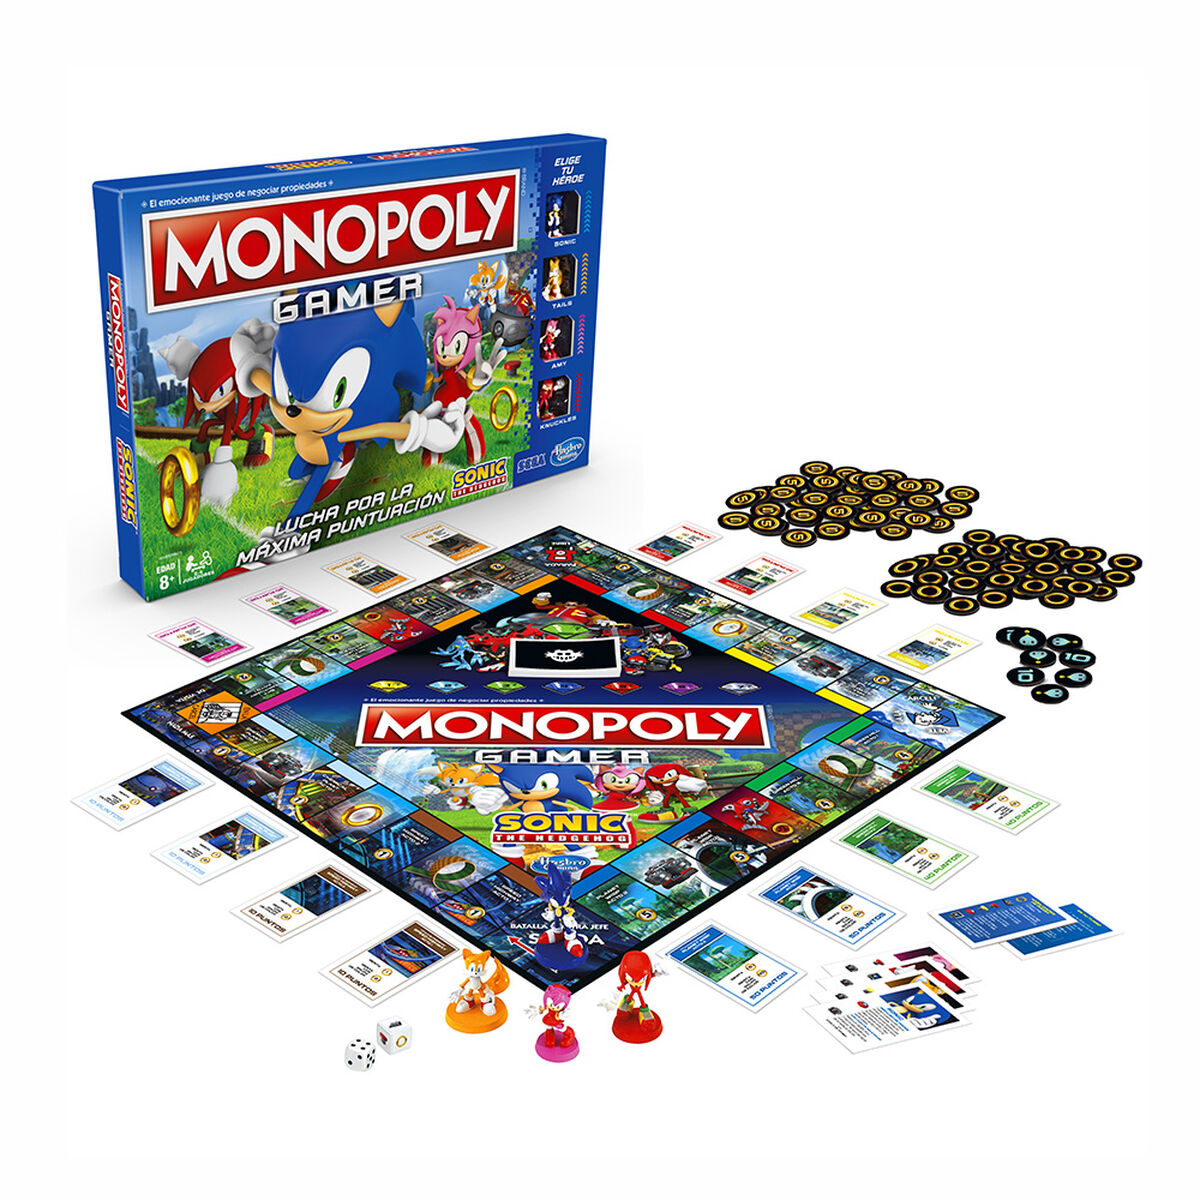 Monopoly Sonic Gamer